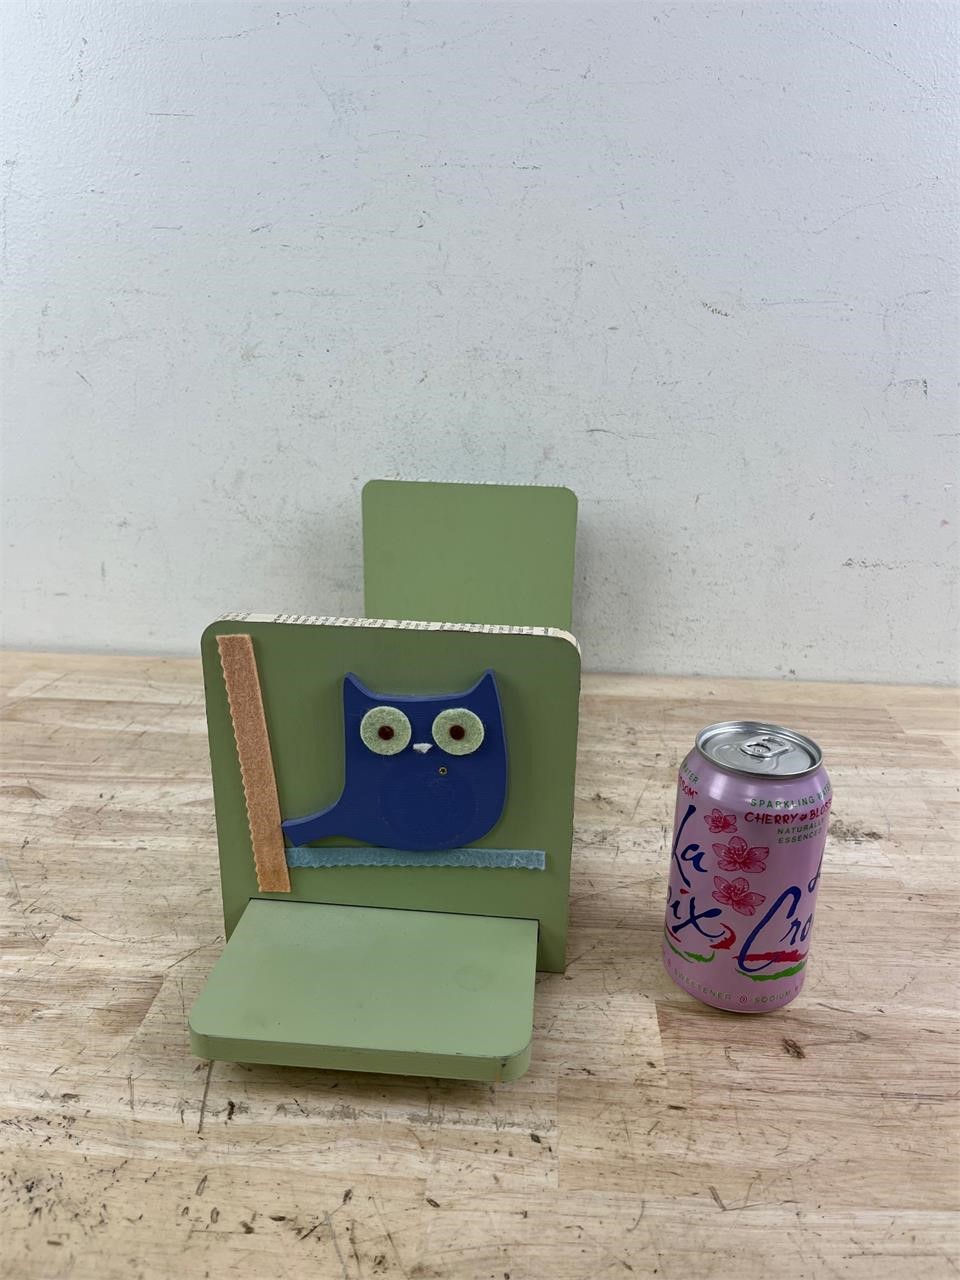 Adjustable owl book shelf